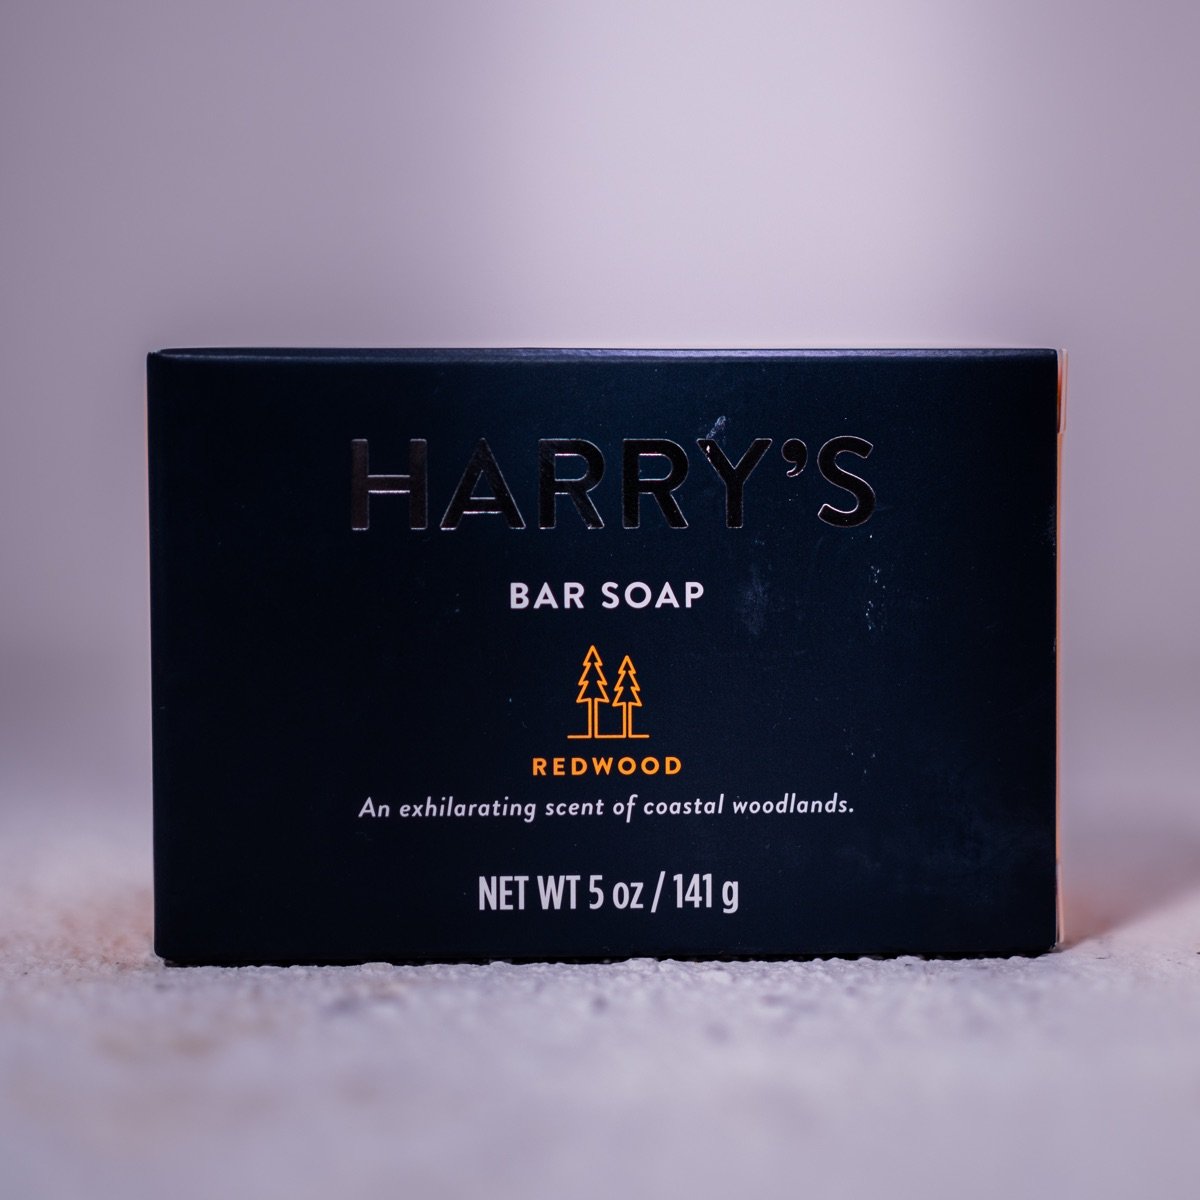 Harry's Harry's Bar Soap Redwood Reviews